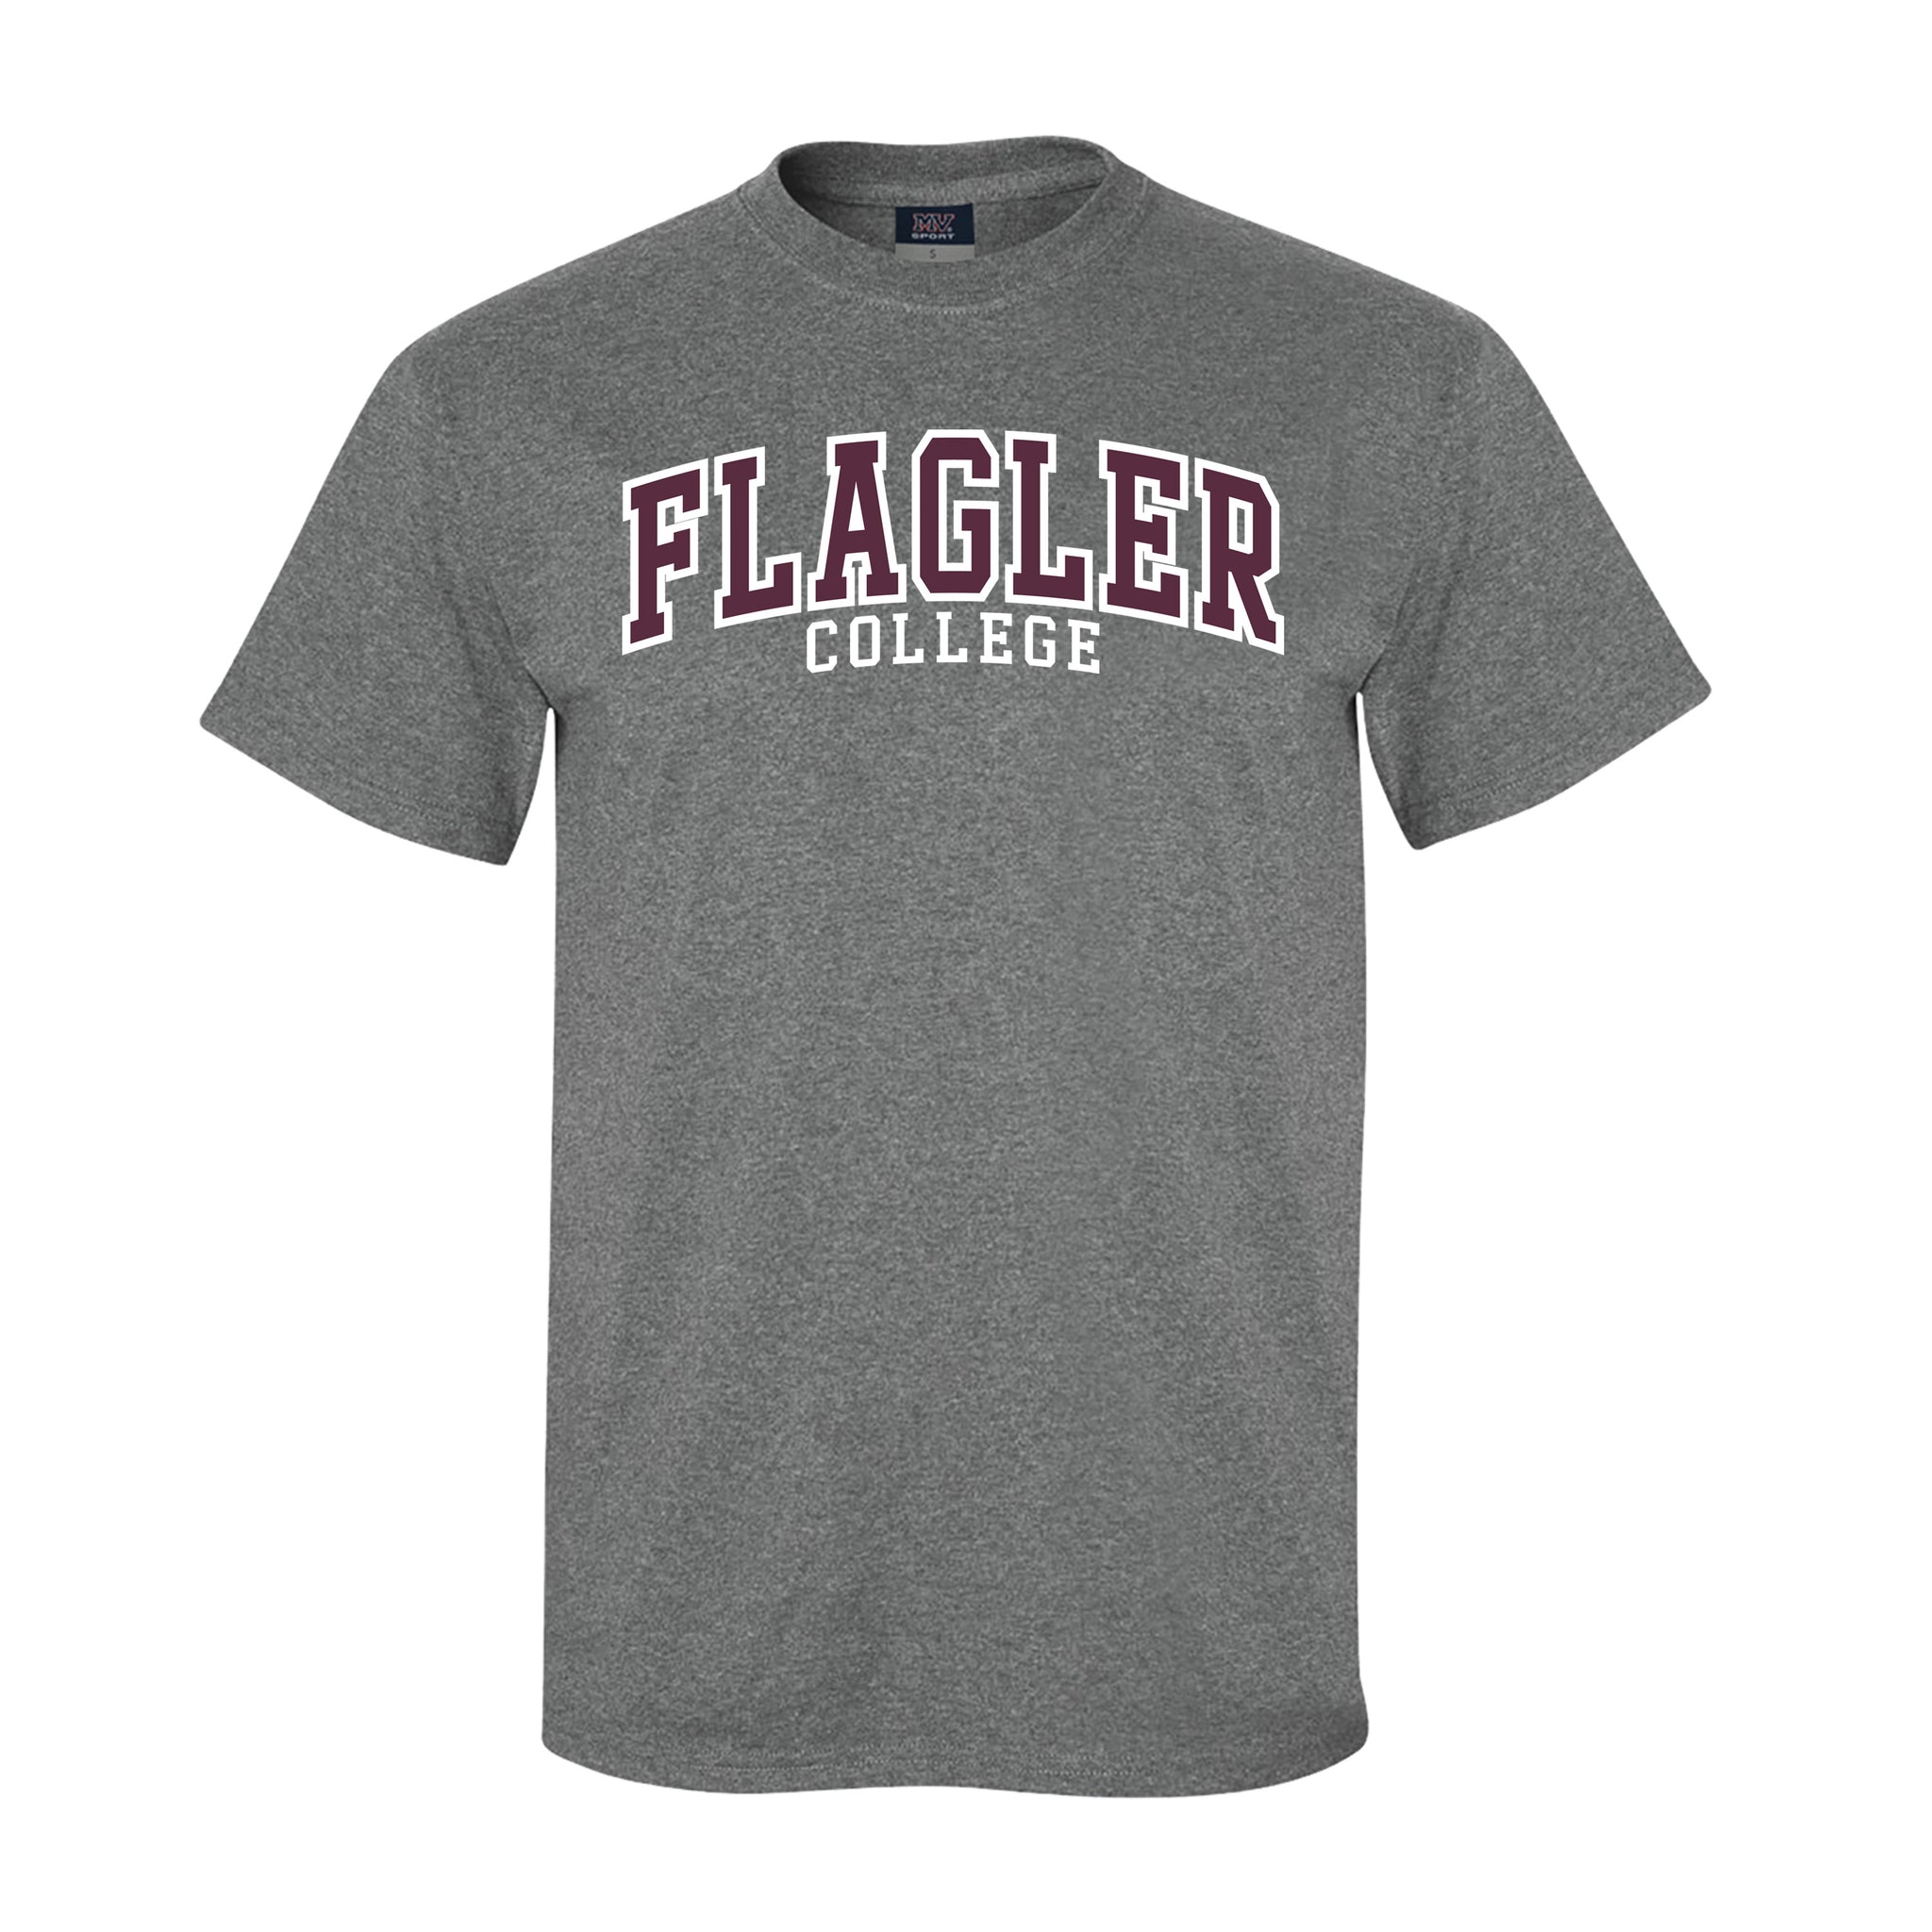 Graphite Classic Flagler College T-Shirt